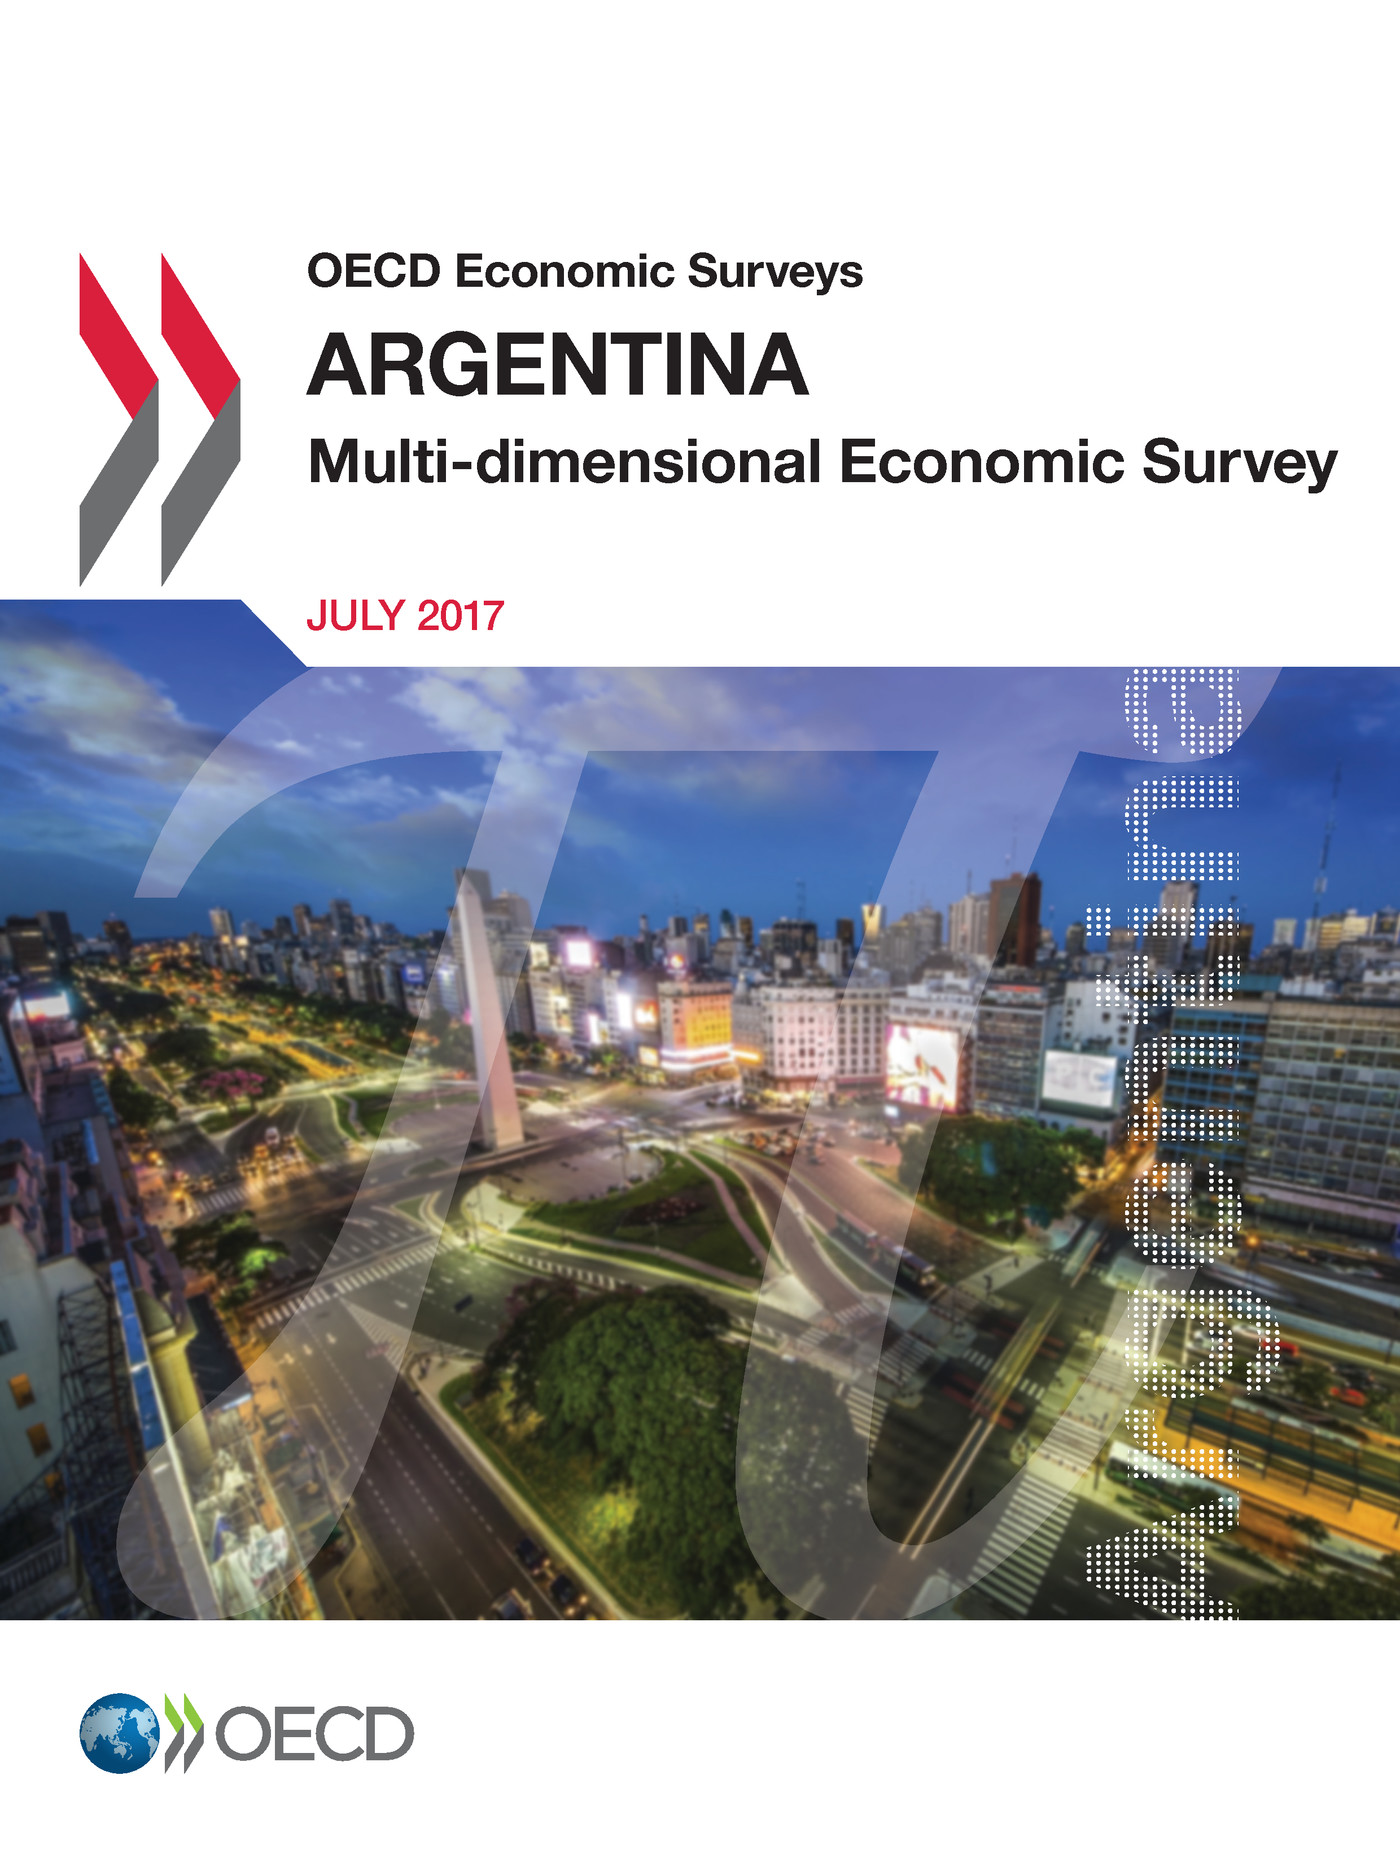 OECD Economic Surveys: Argentina 2017 -  Collectif - OCDE / OECD